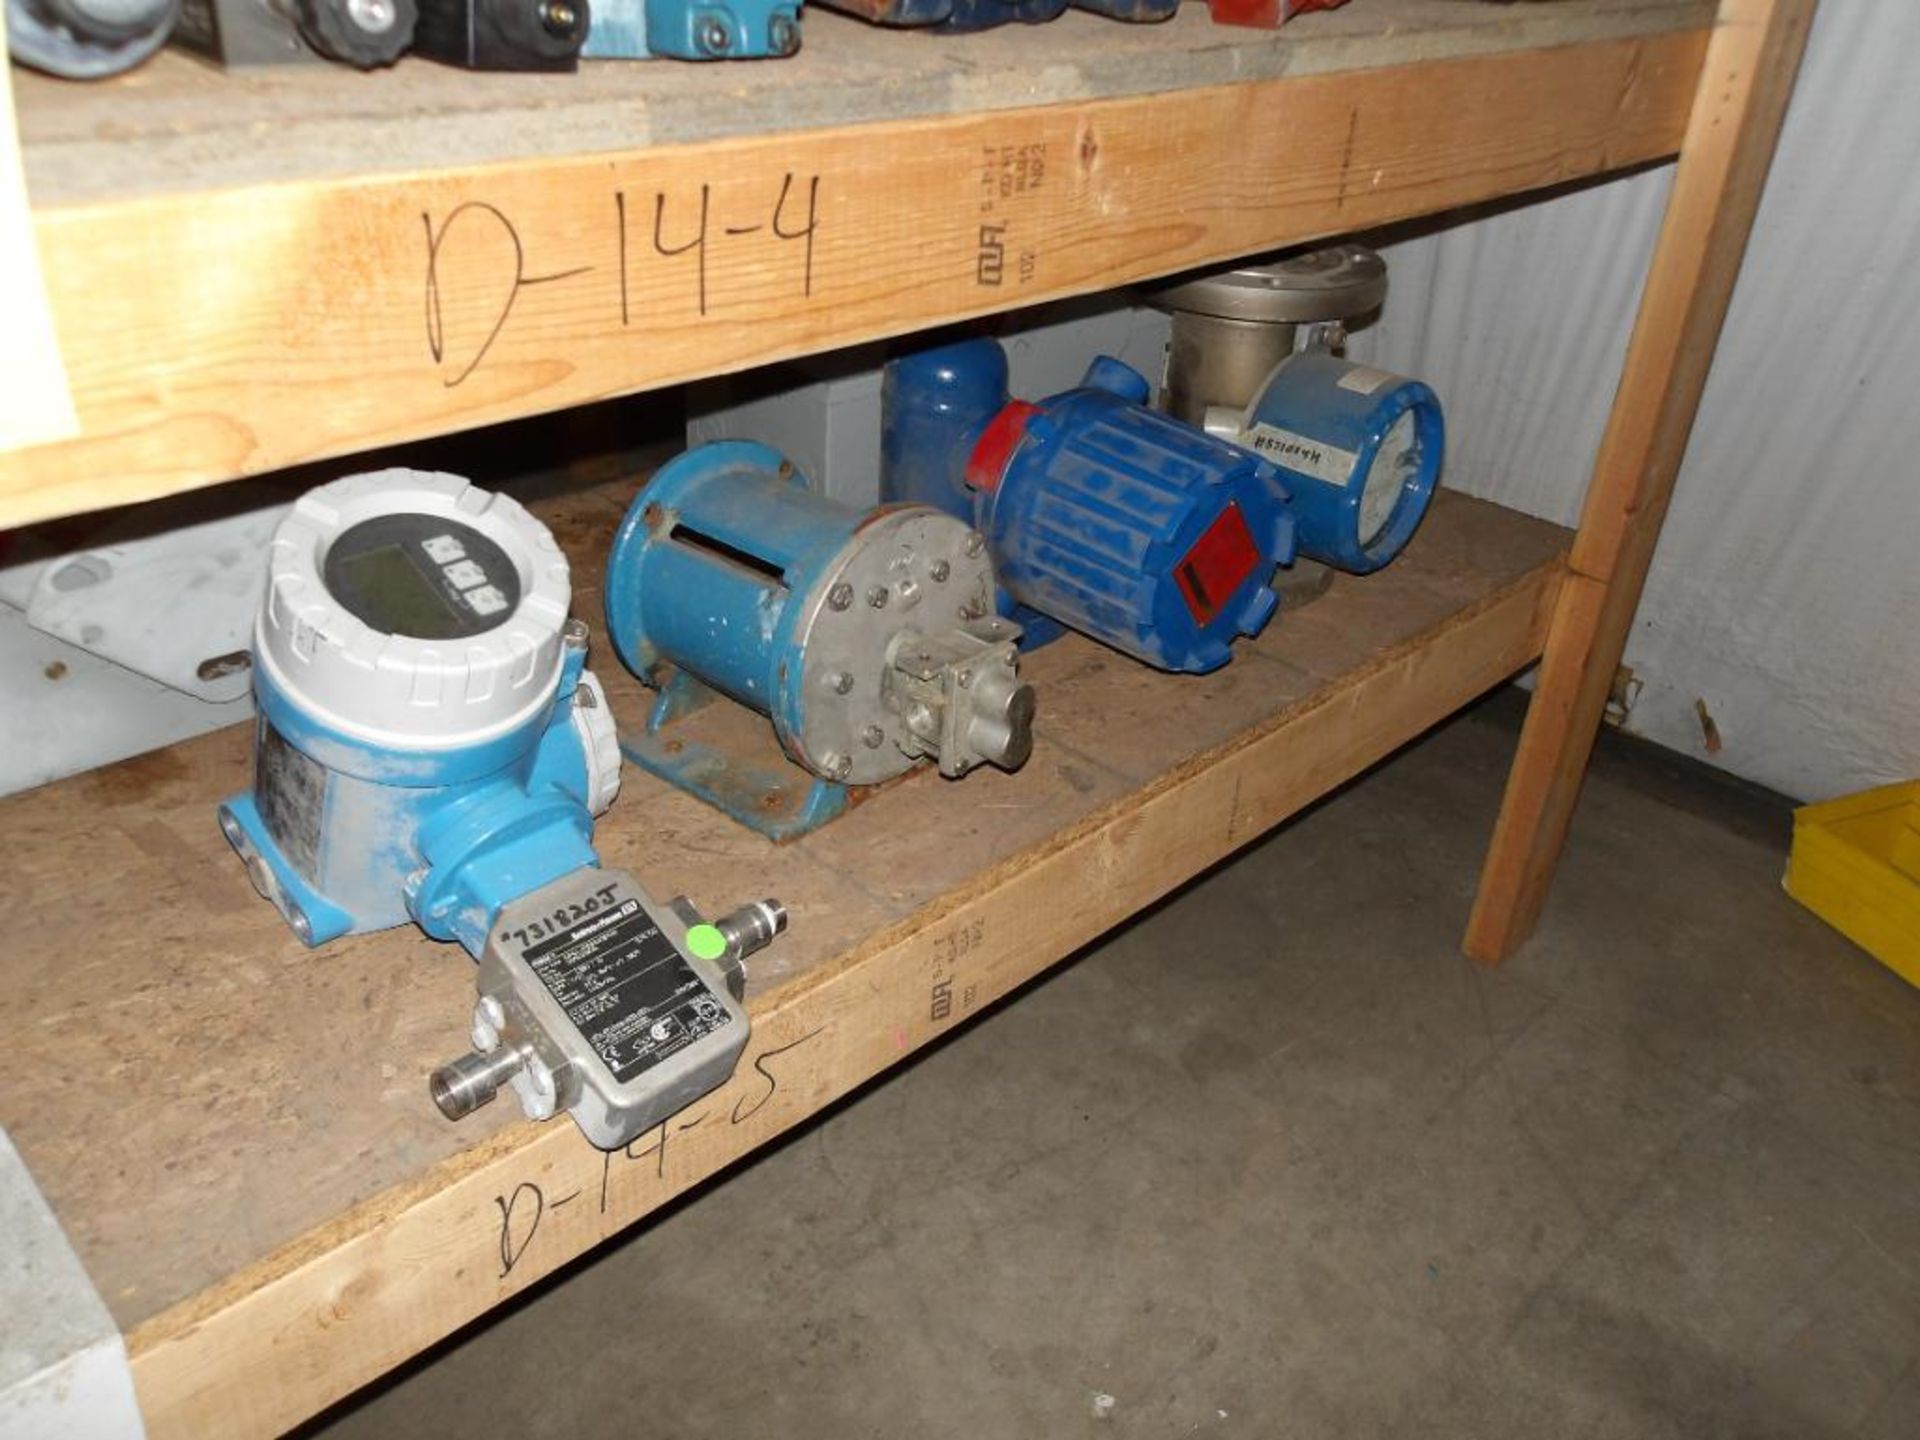 Contents of Shelf D-13-5 & D-14-5; Air Compressor, Relief Valves, Endress, Hauser, Pump, Flow Meters